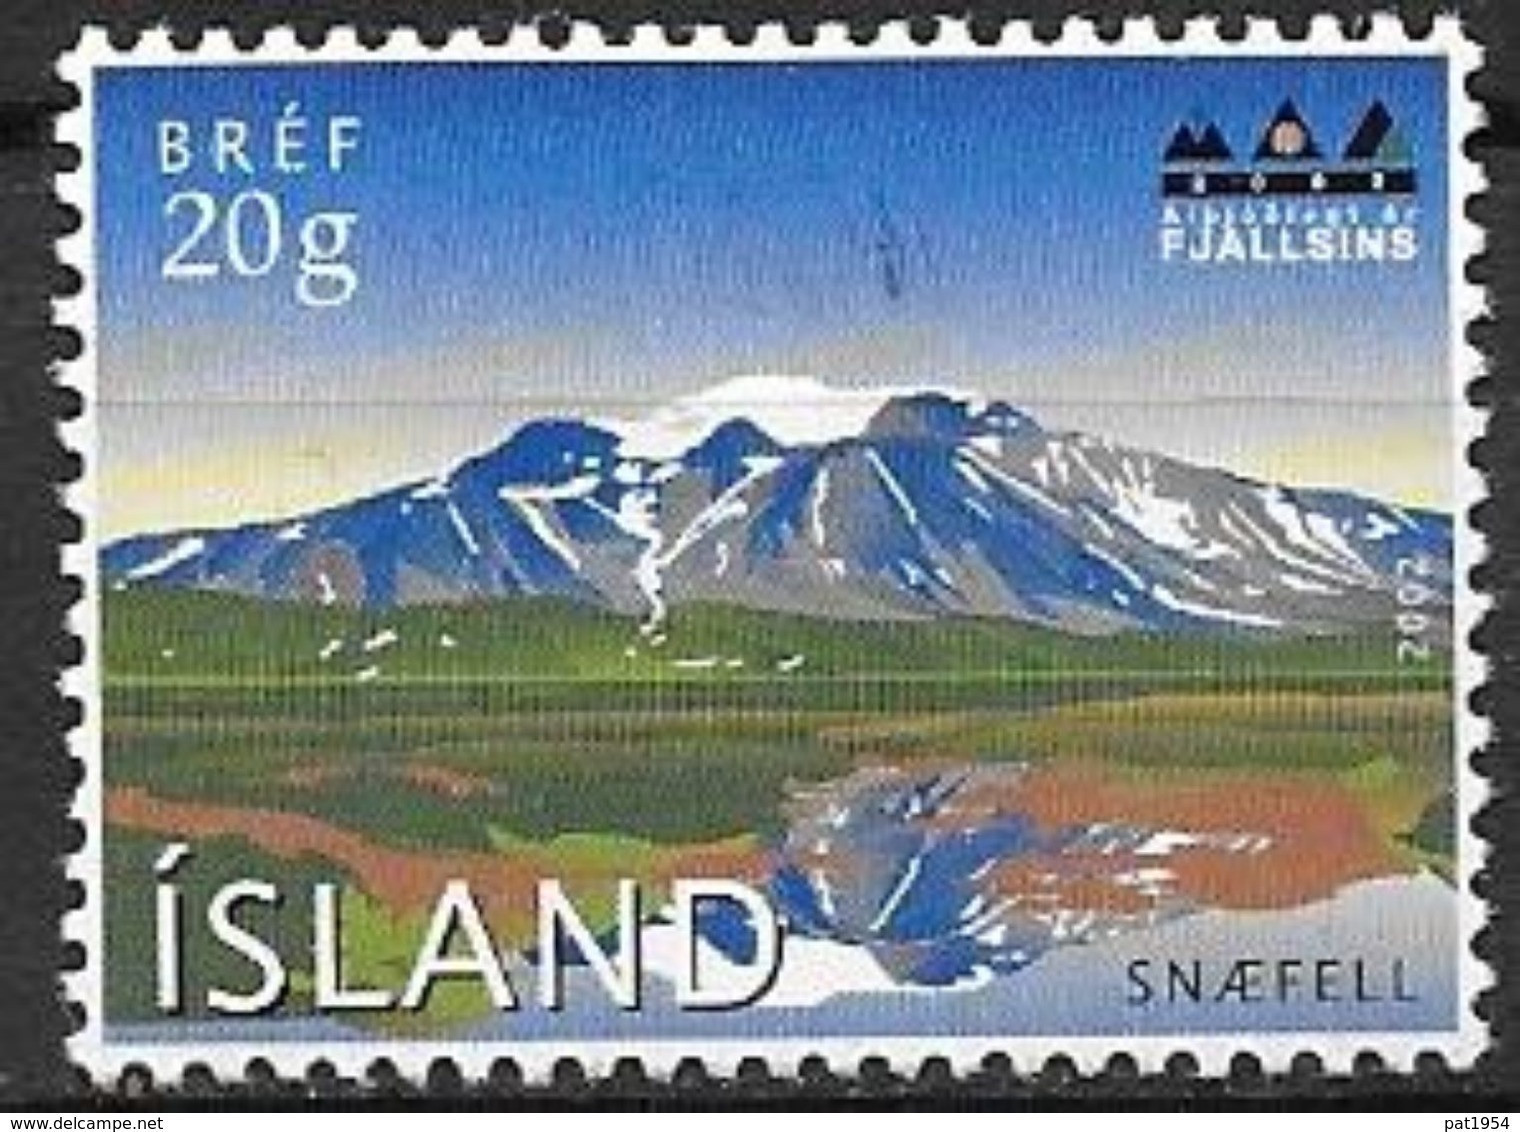 Islande 2002 N°932 Neuf** Année De La Montagne Snaefel - Ongebruikt